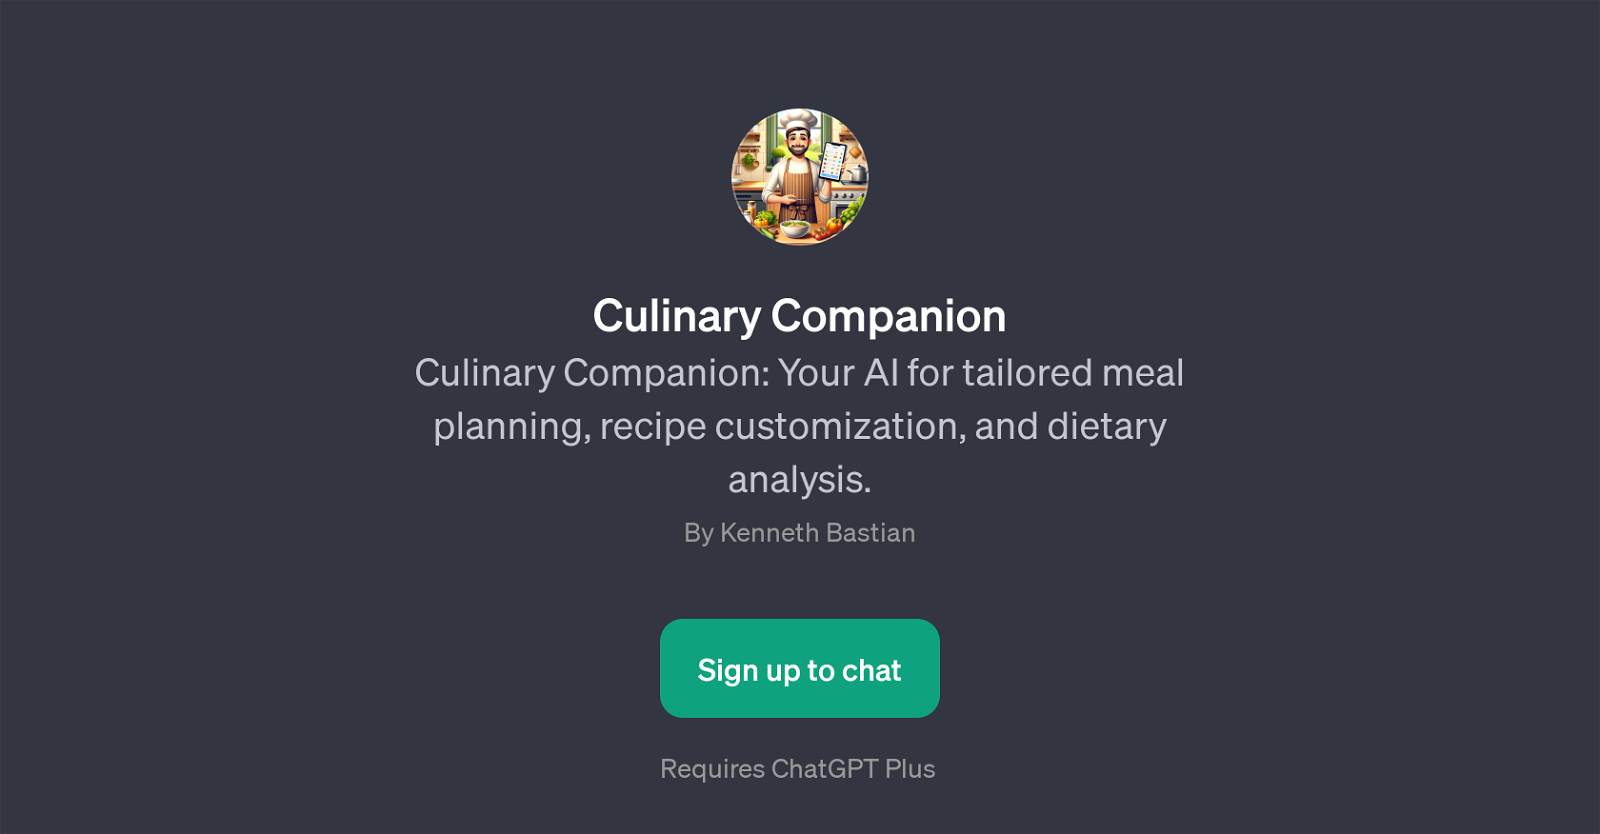 Culinary Companion website